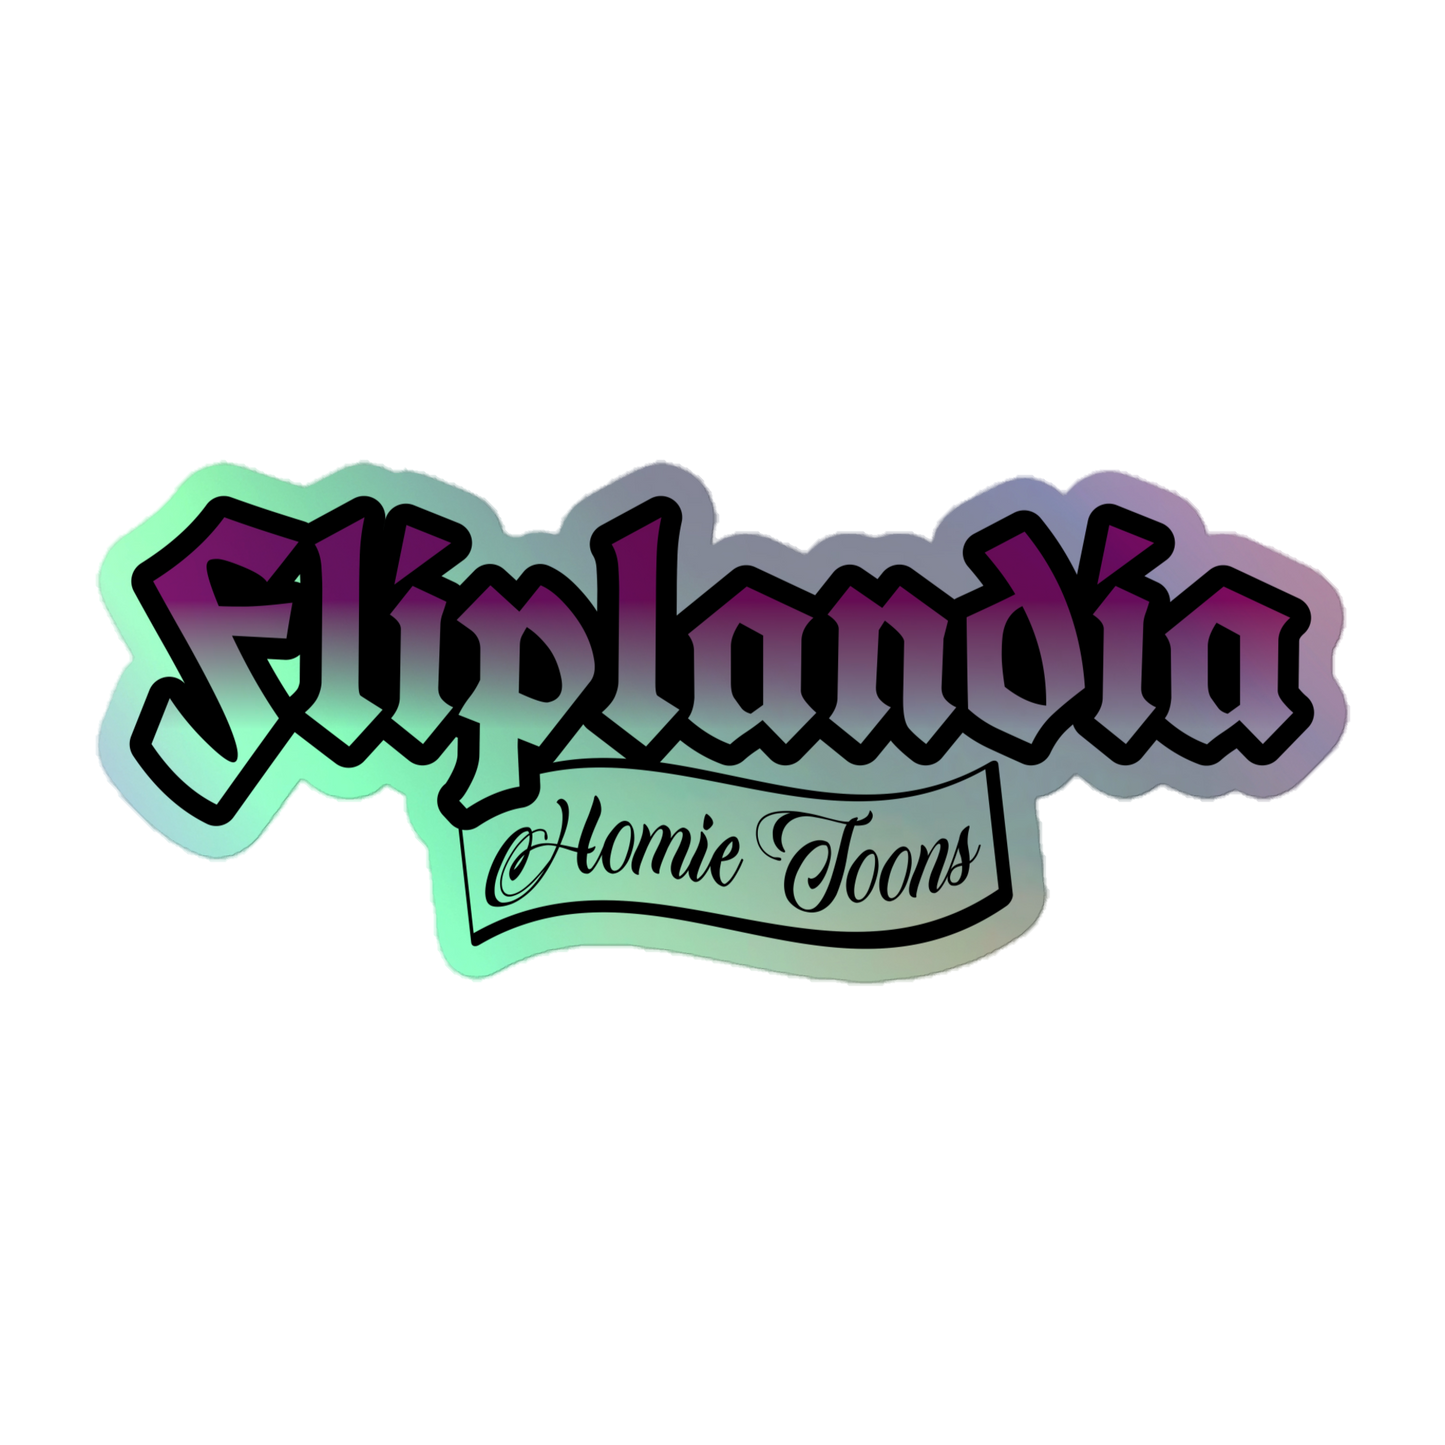 Fliplandia Homie Toons - Holographic Sticker (3 sizes avail.)